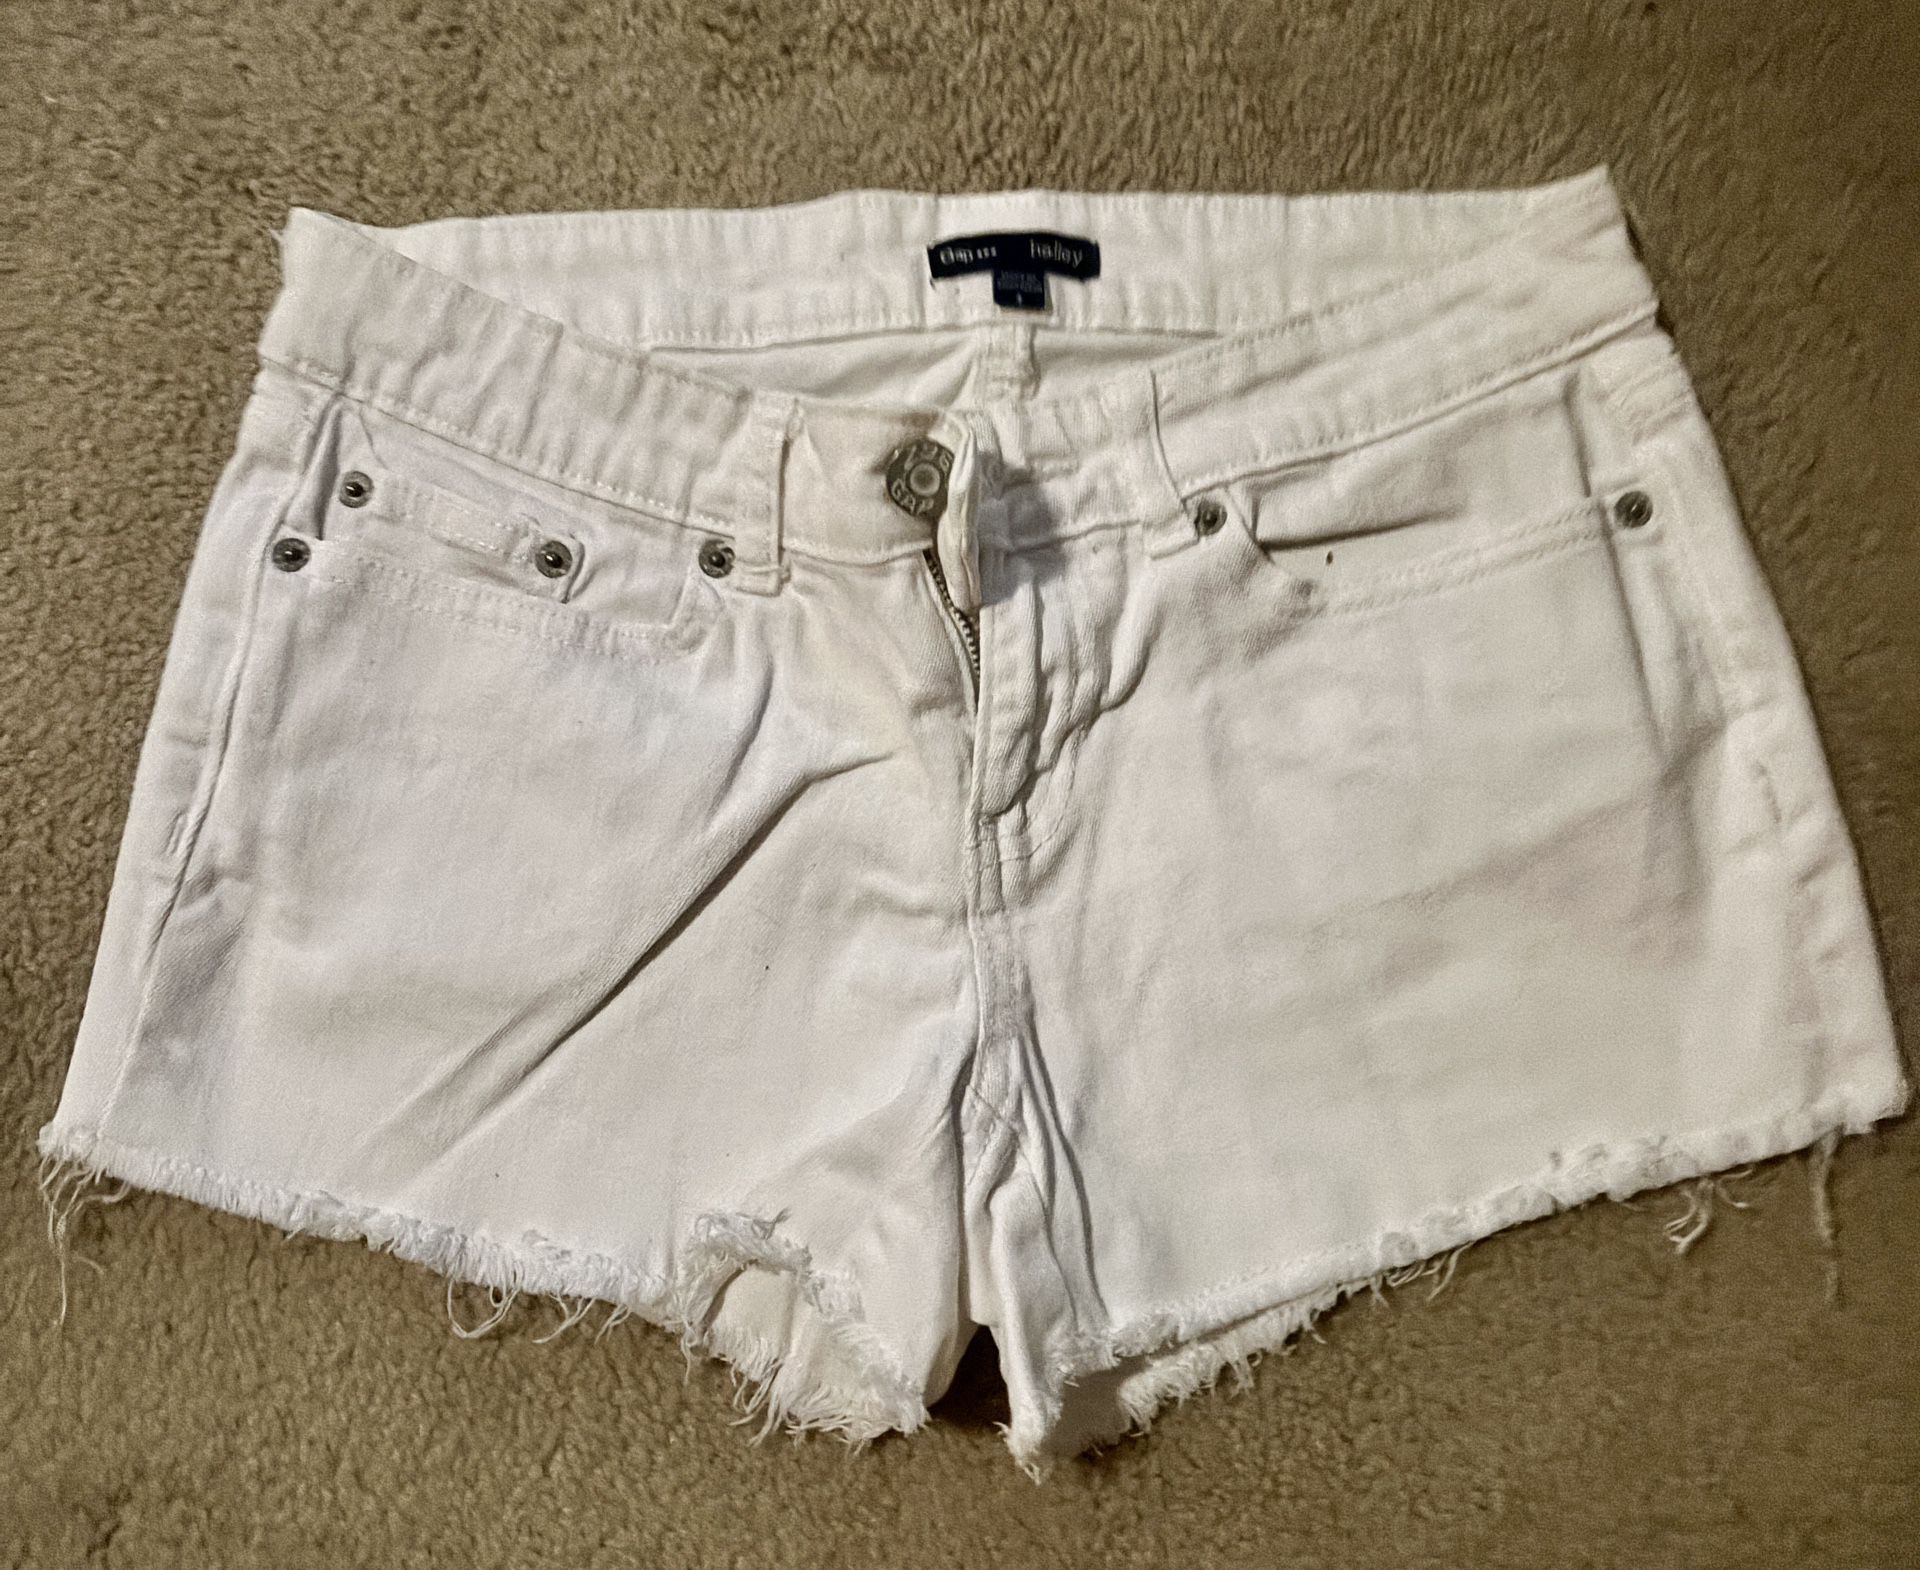 Gap Brand Shorts, Size 4